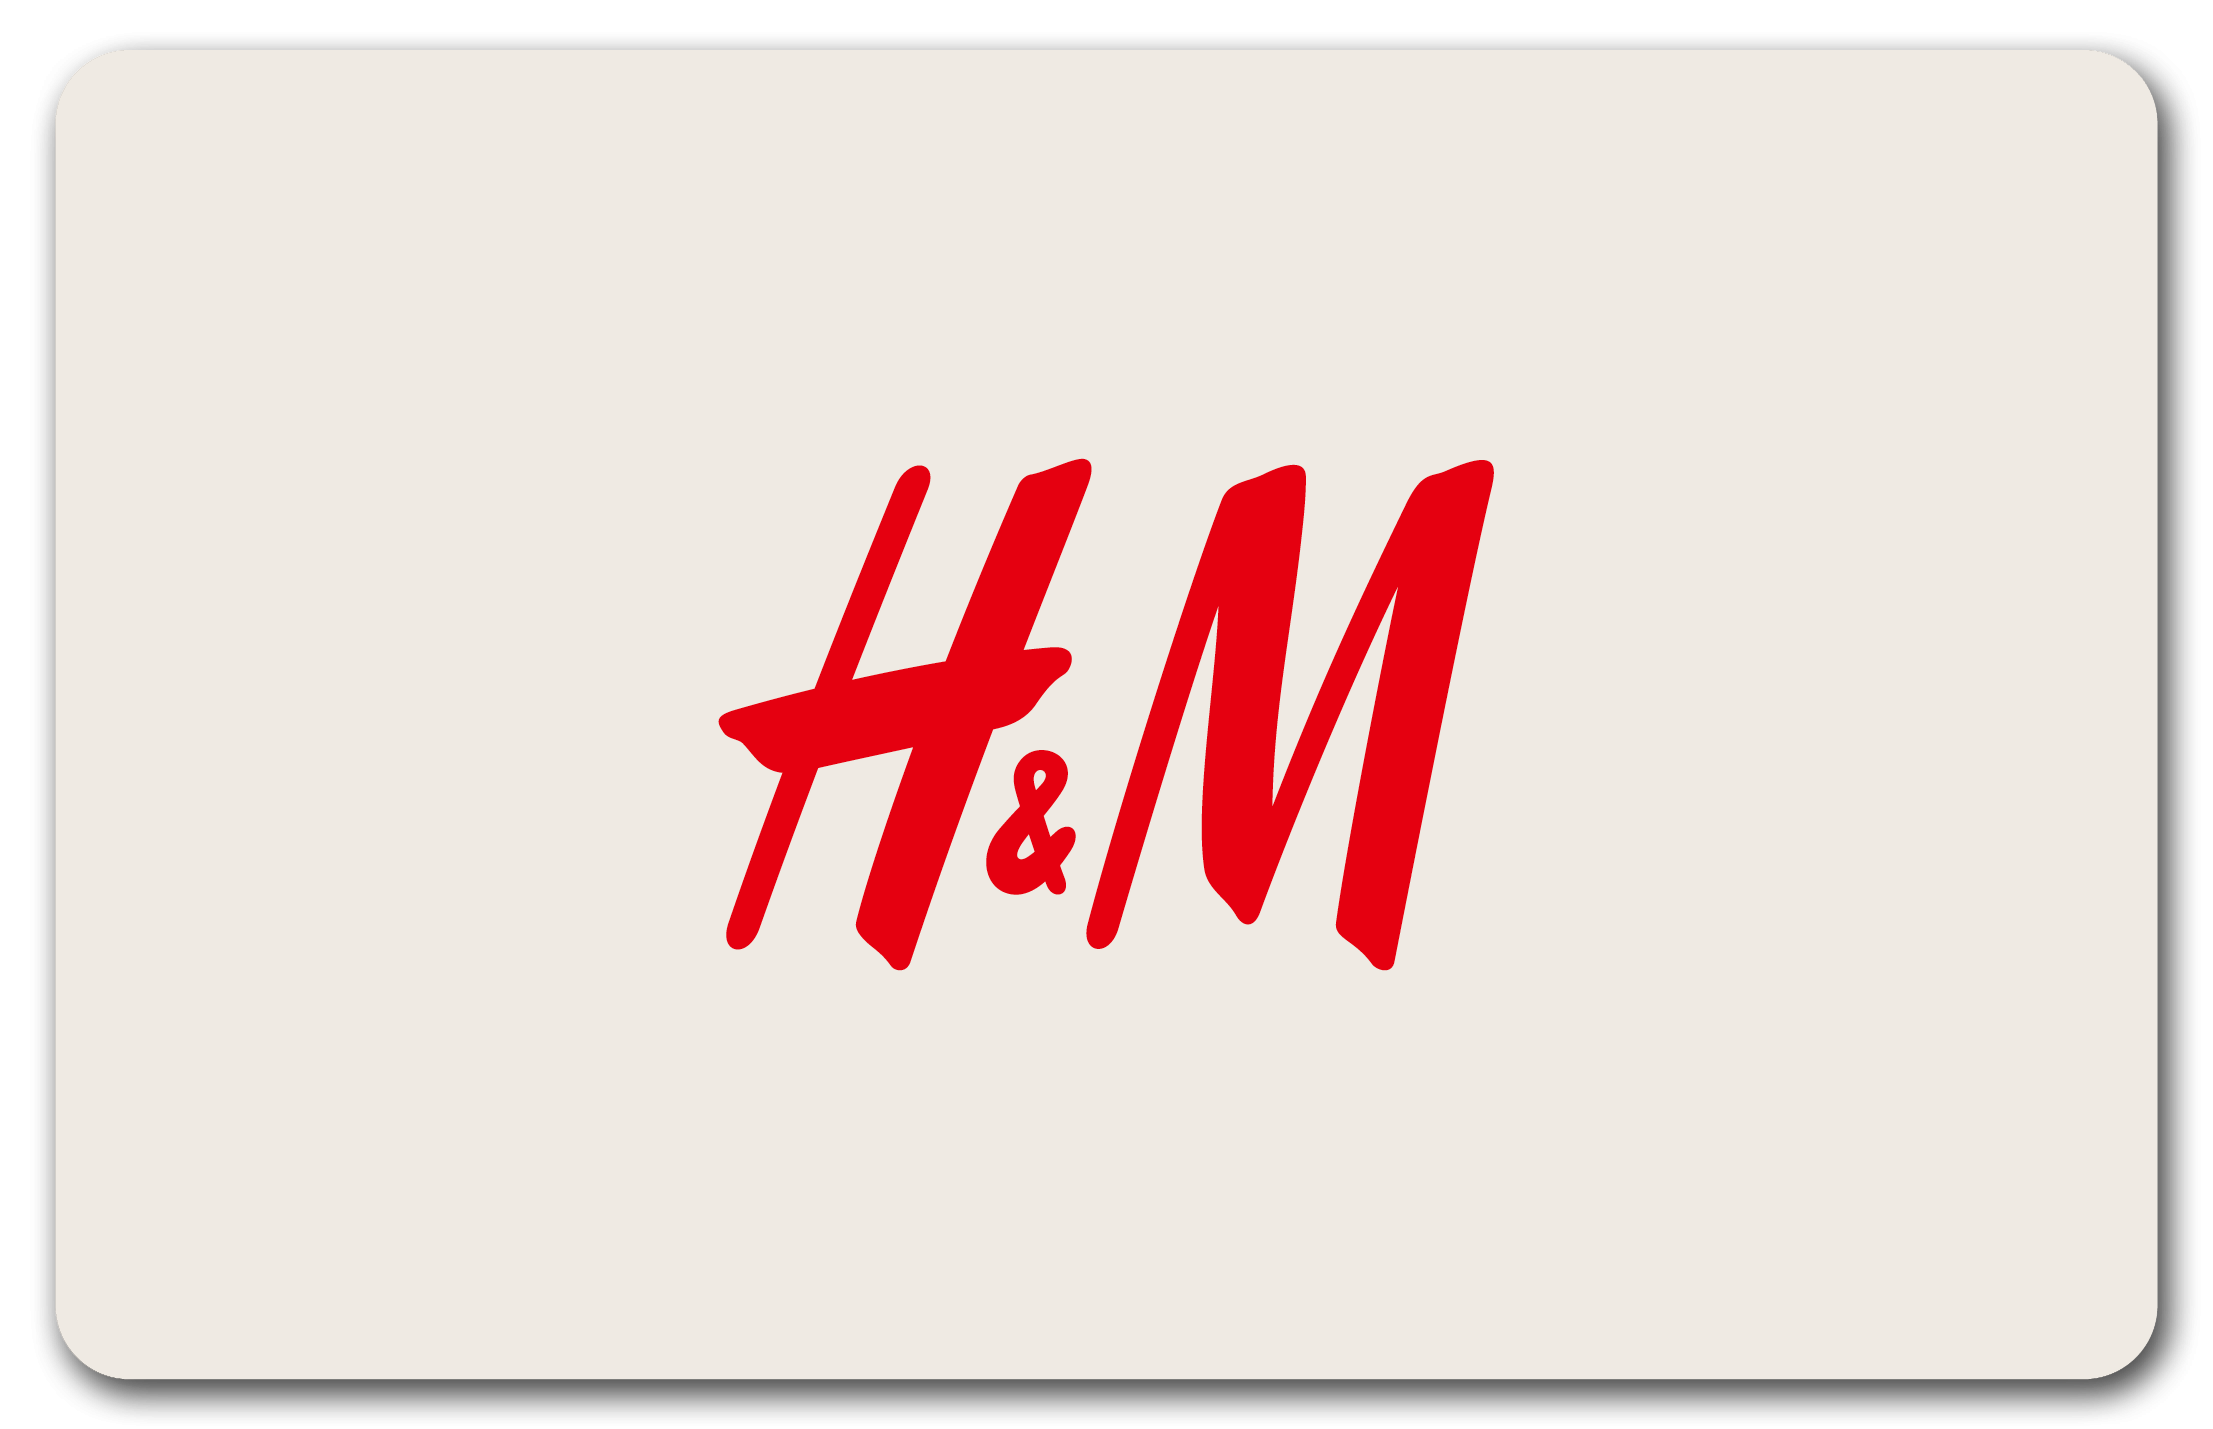 H&M Brive-la-Gaillarde